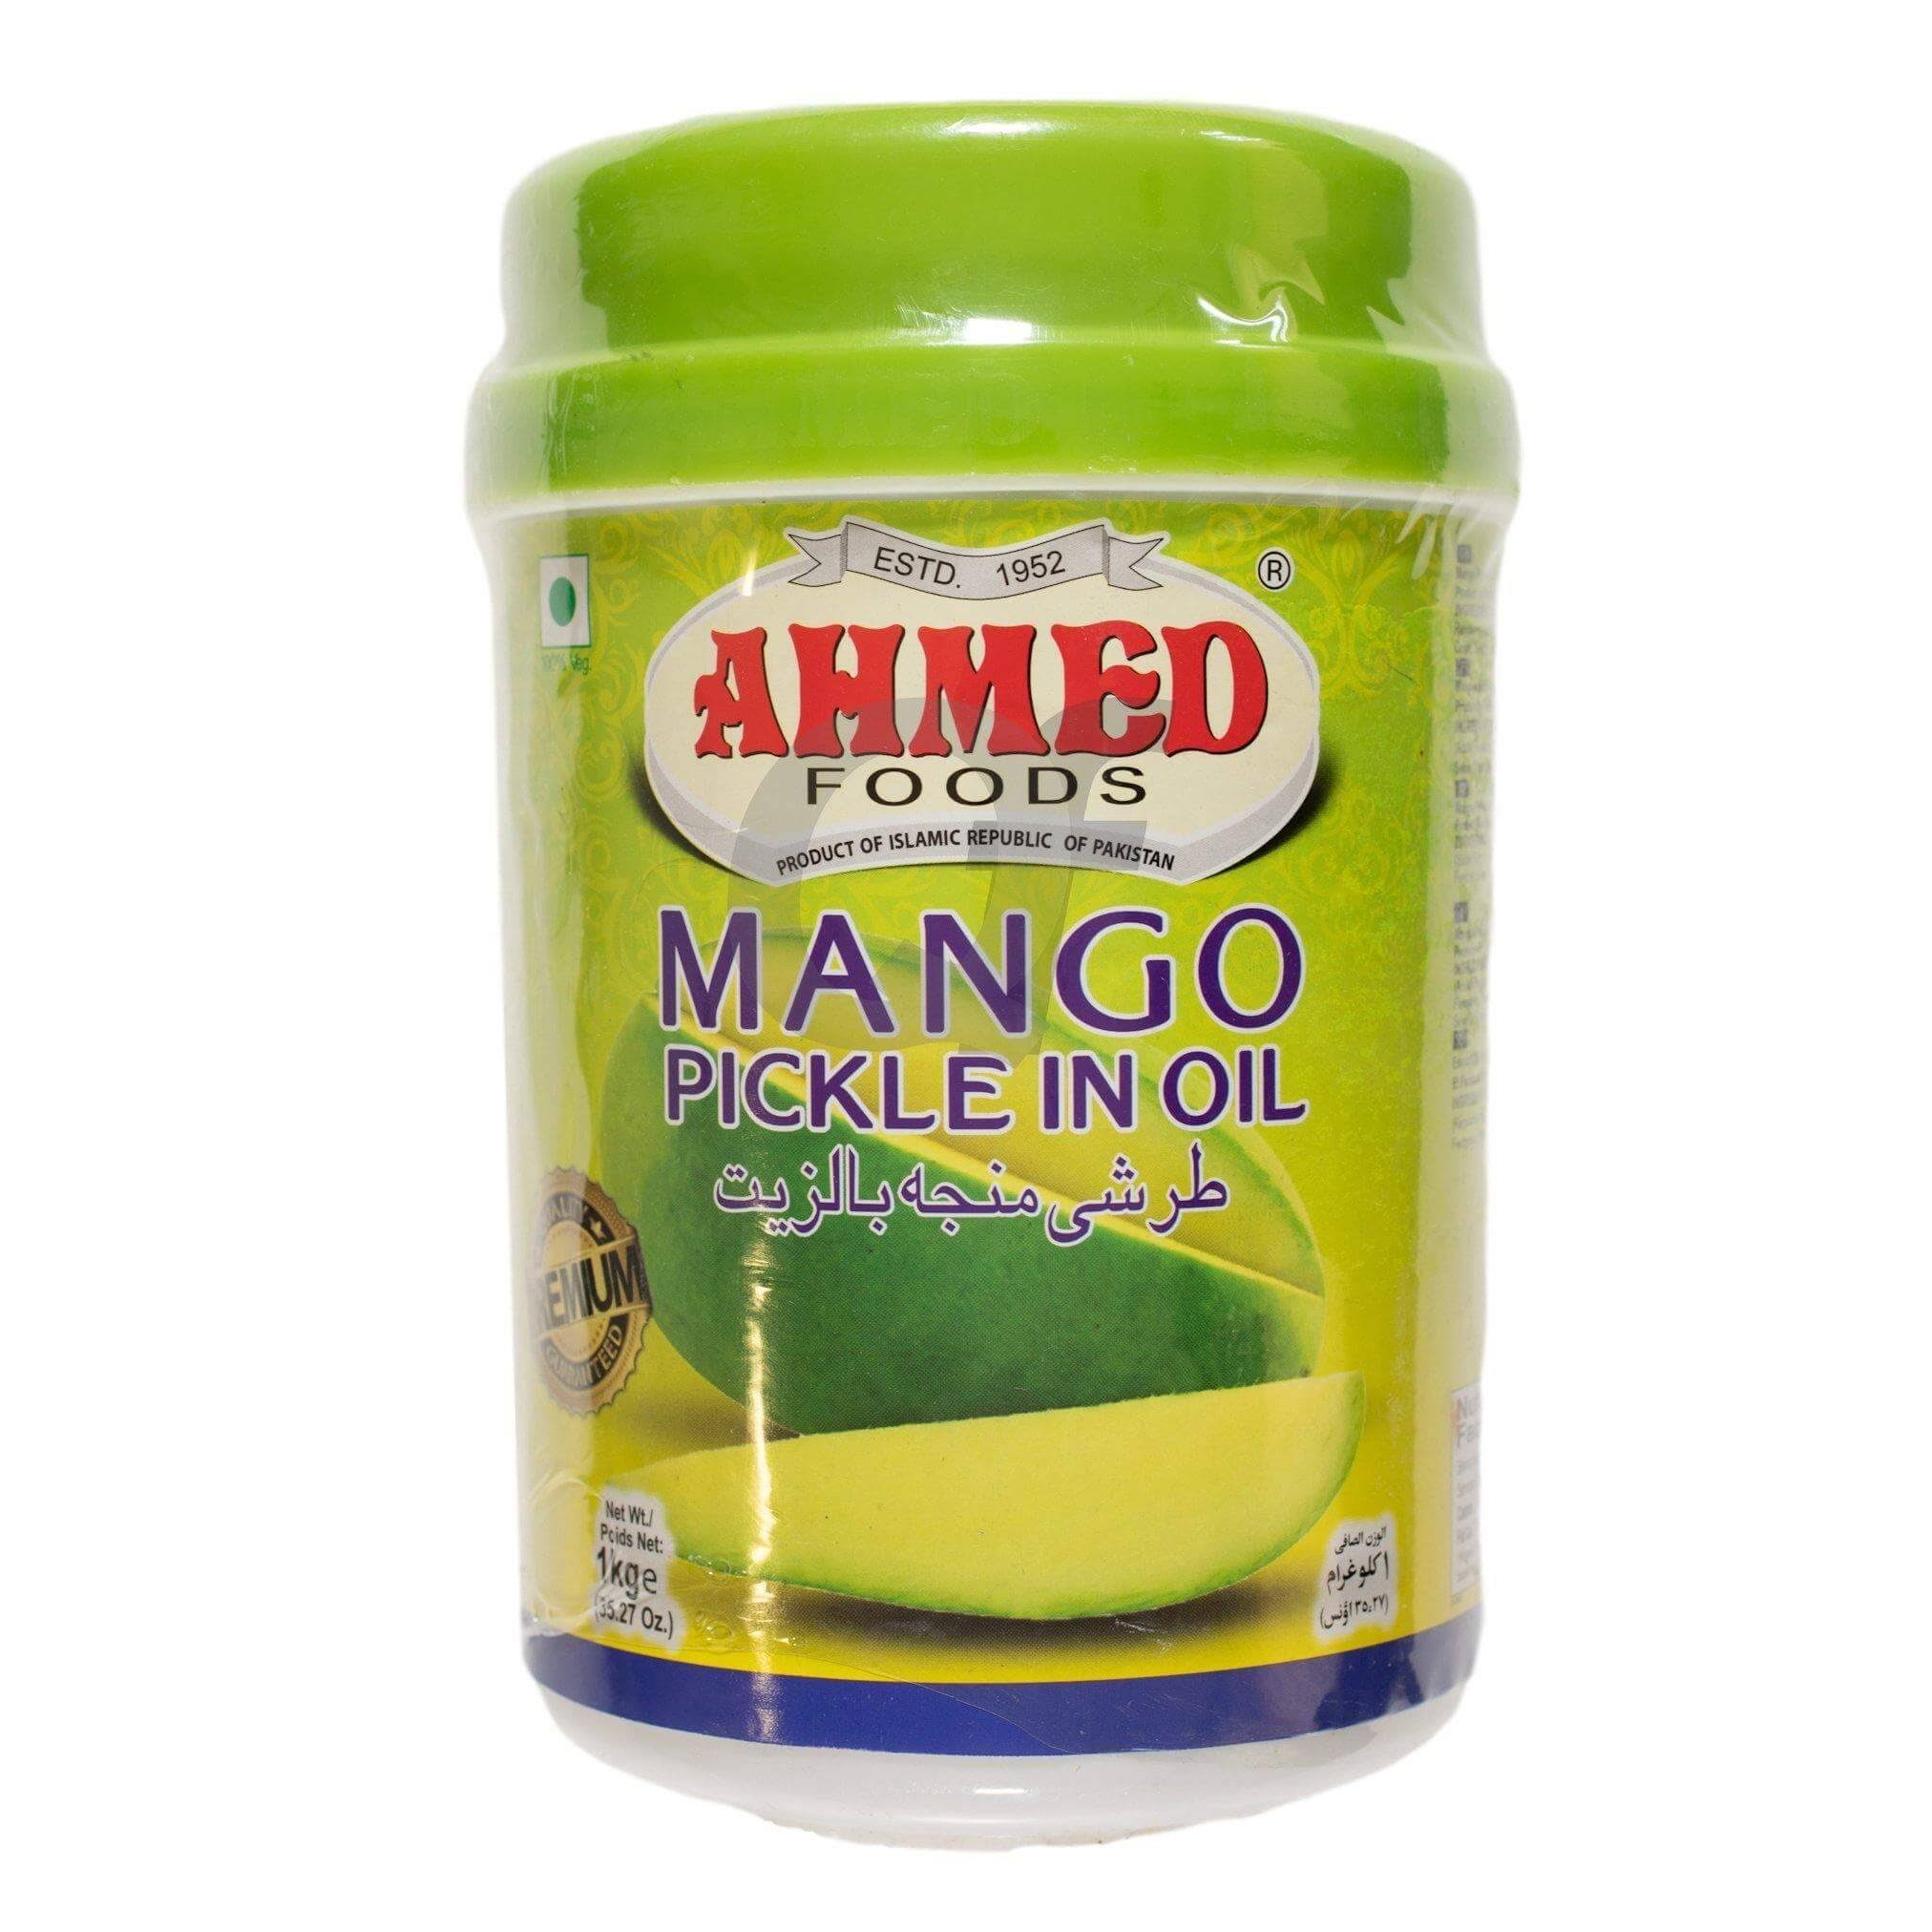 Ahmed Mango Pickle 1kg